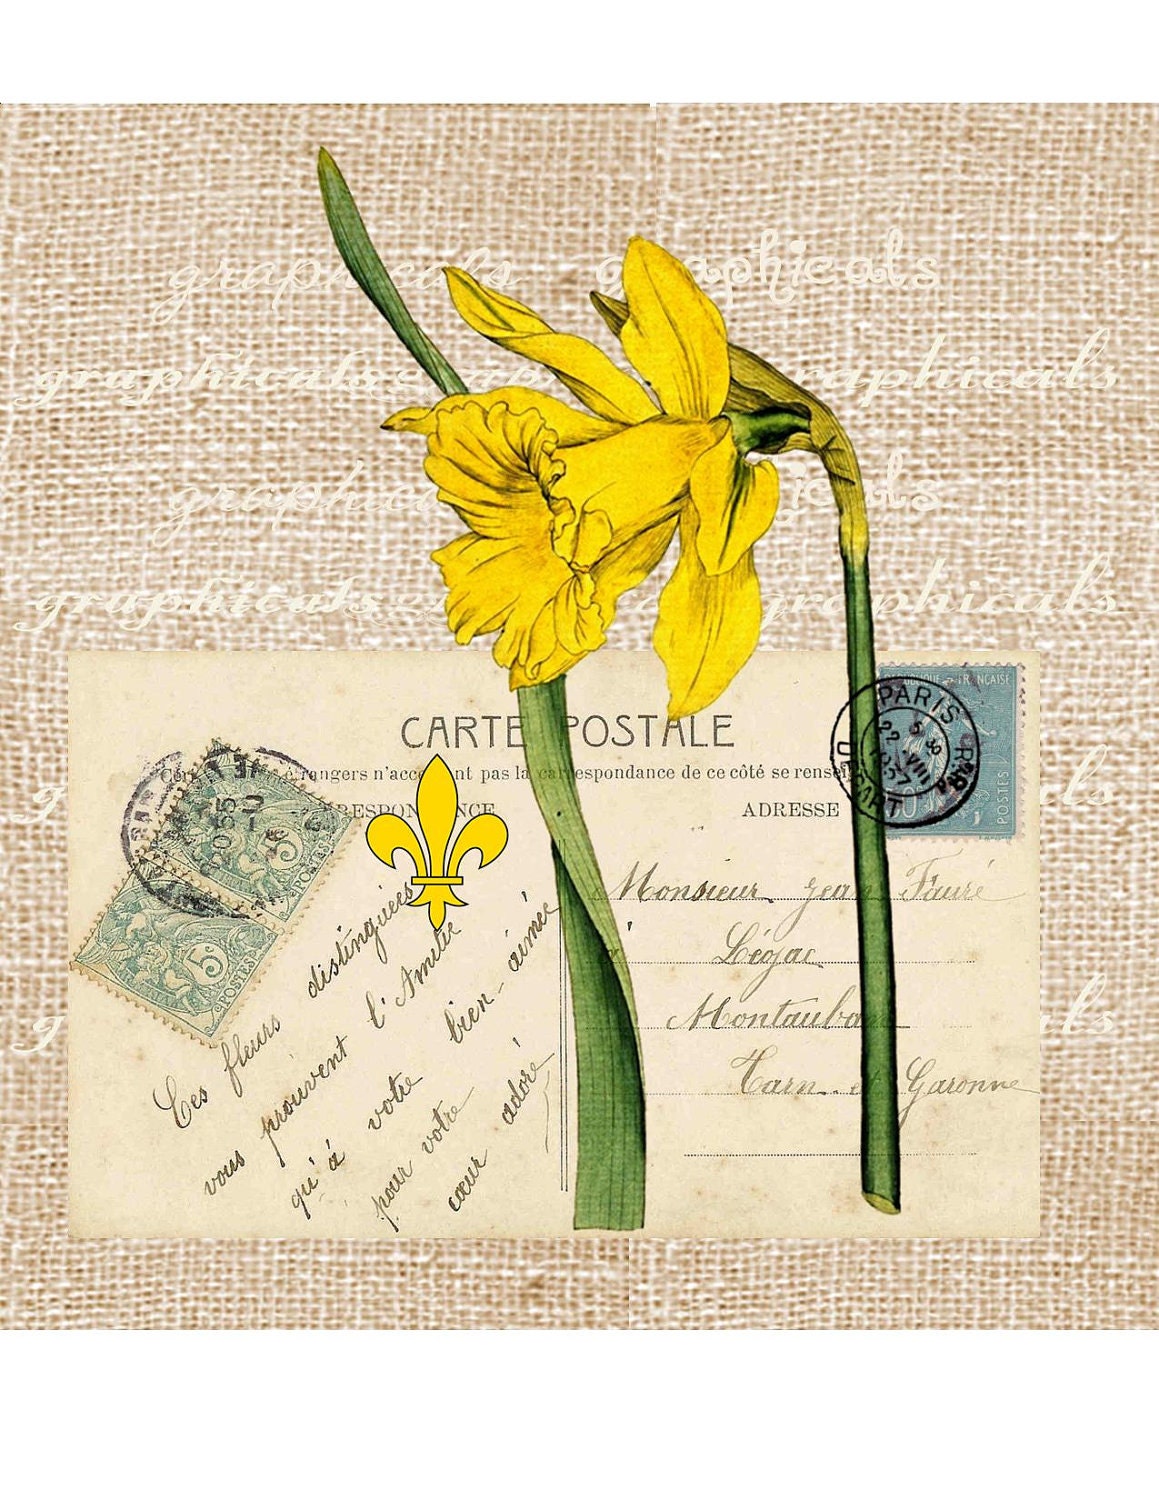 Paris spring digital download image Vintage daffodil French ephemera Carte Postale transfer to fabric paper burlap pillows tote bags No. 571